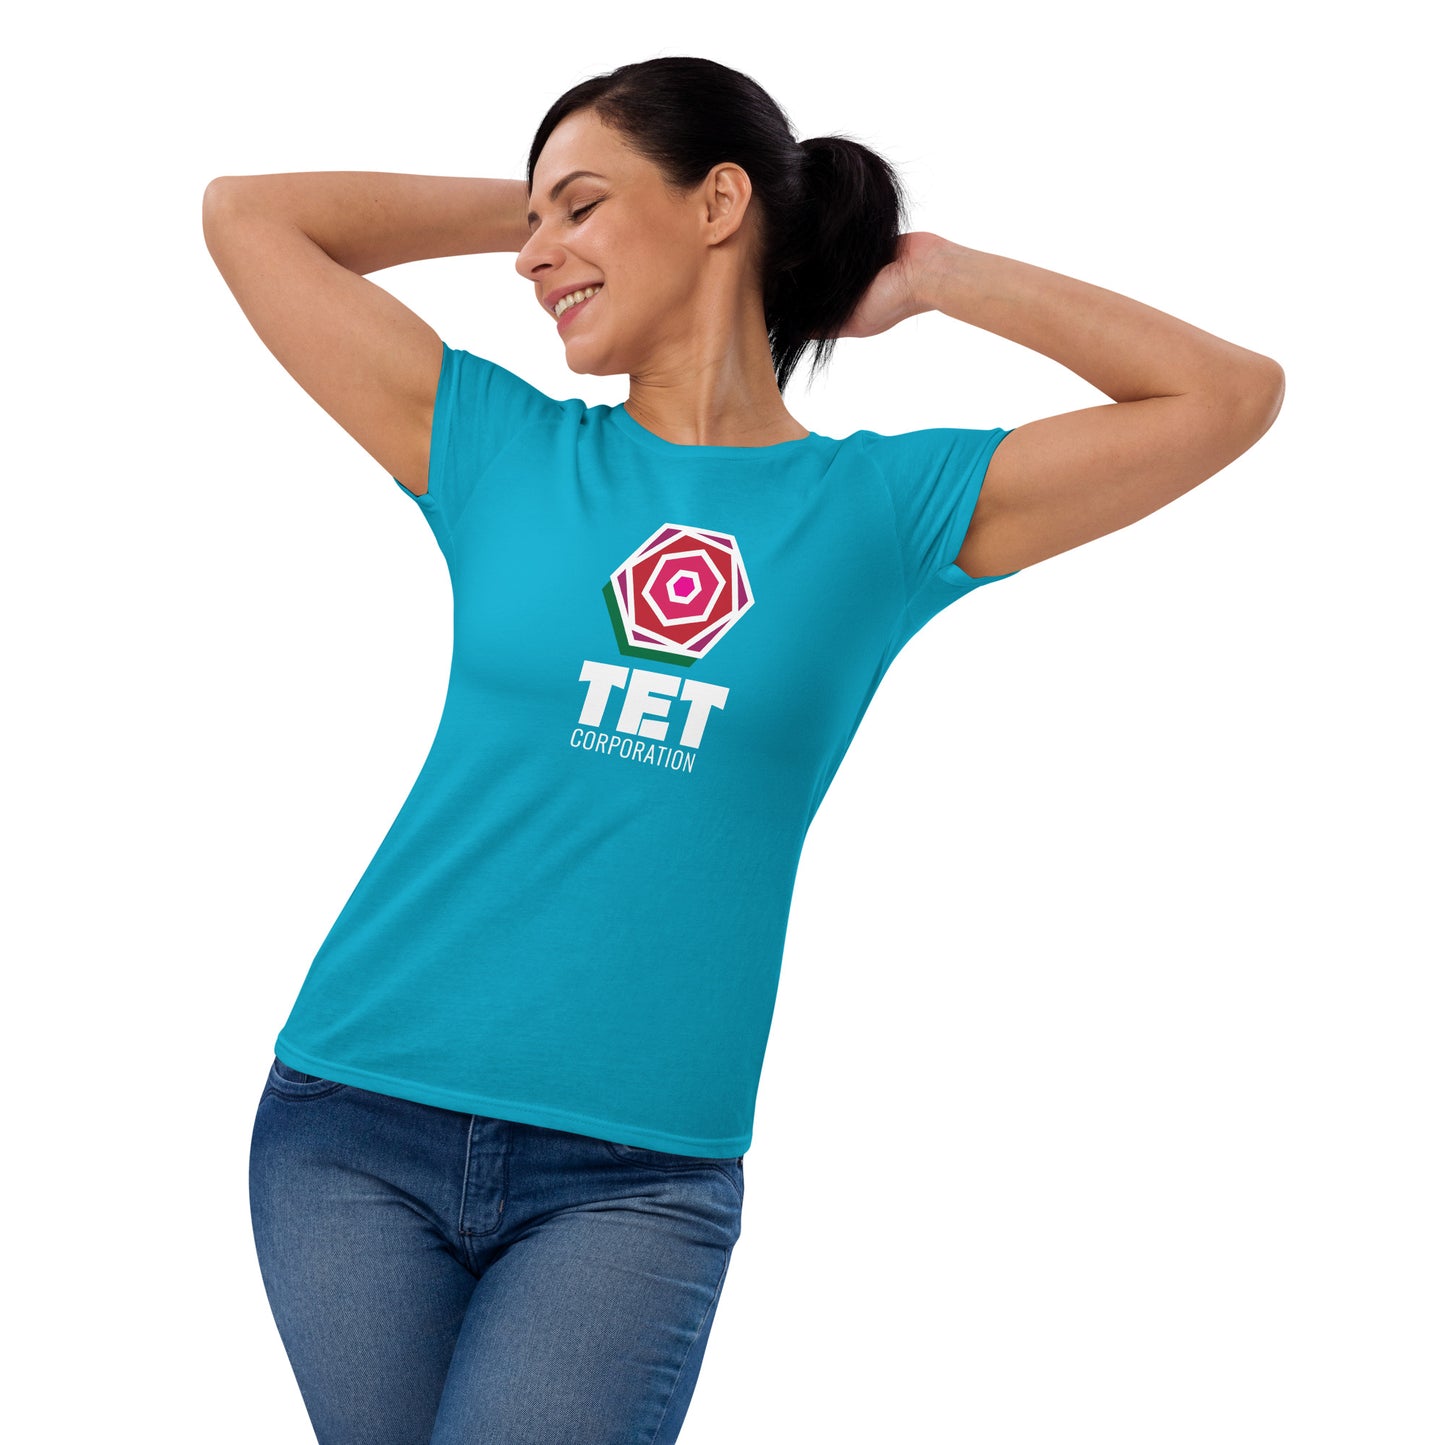 Tet Corporation T-Shirt, Black Logo, Women's Fit